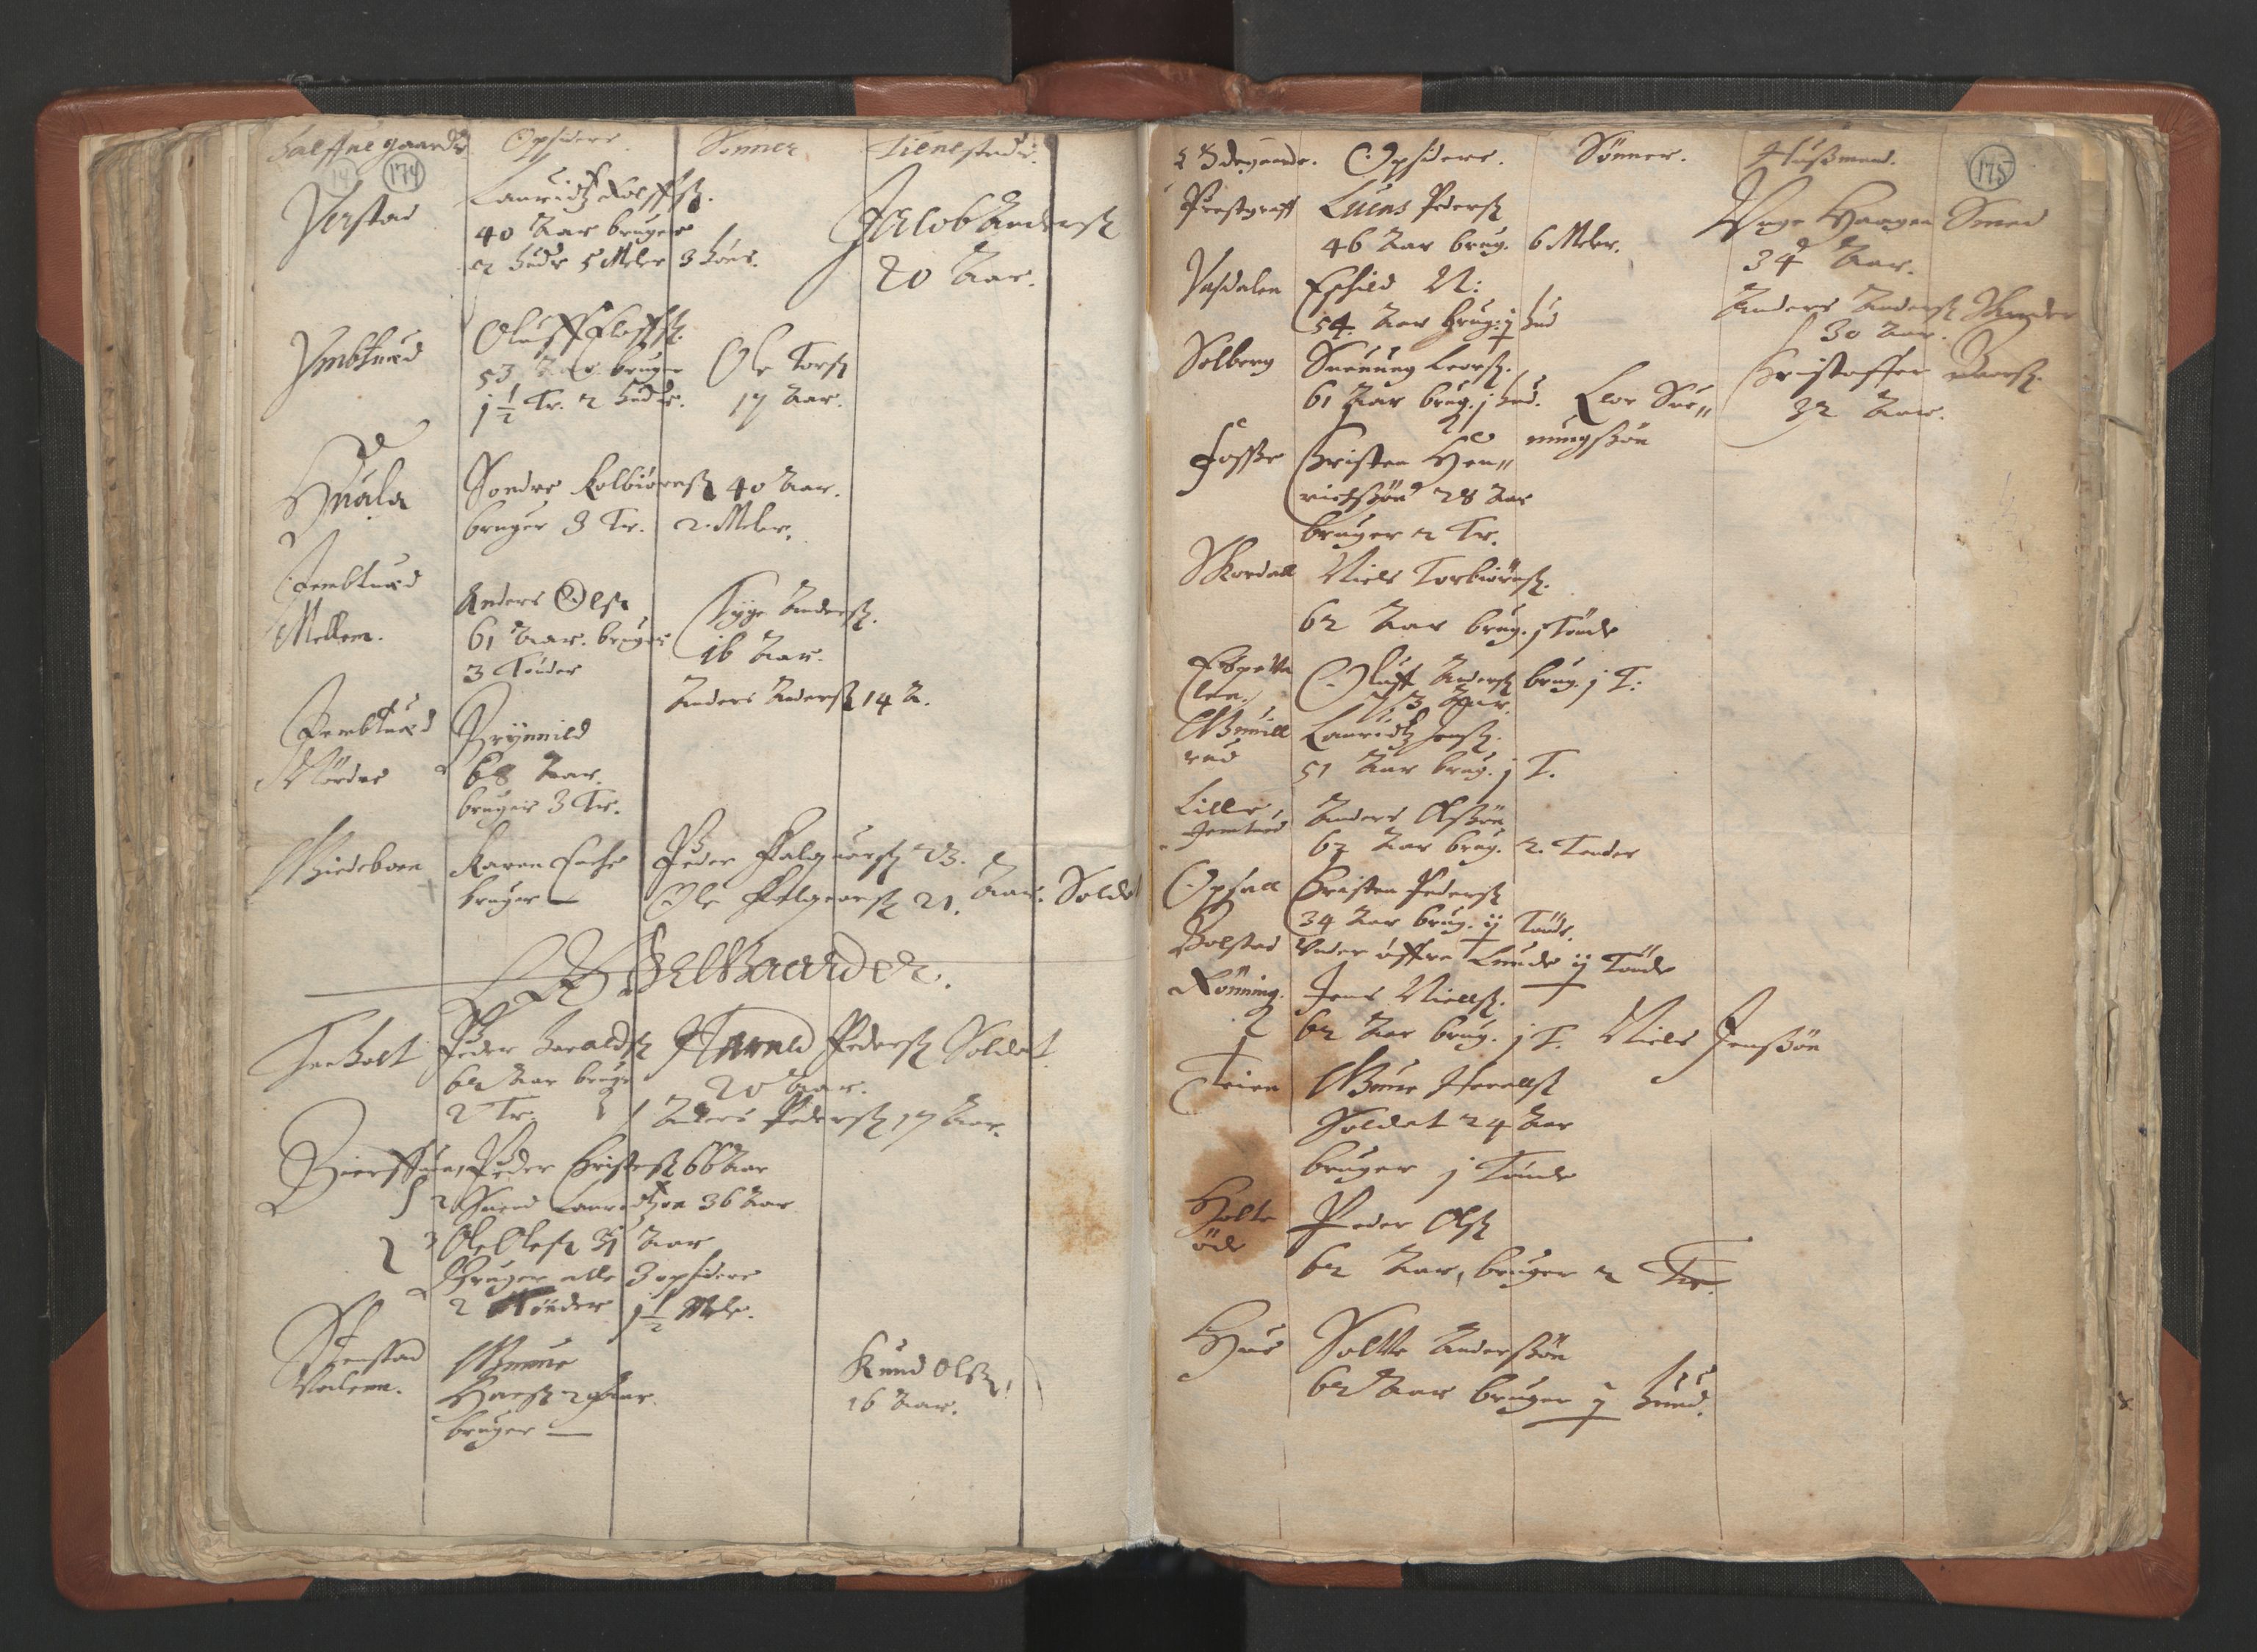 RA, Vicar's Census 1664-1666, no. 12: Øvre Telemark deanery, Nedre Telemark deanery and Bamble deanery, 1664-1666, p. 174-175